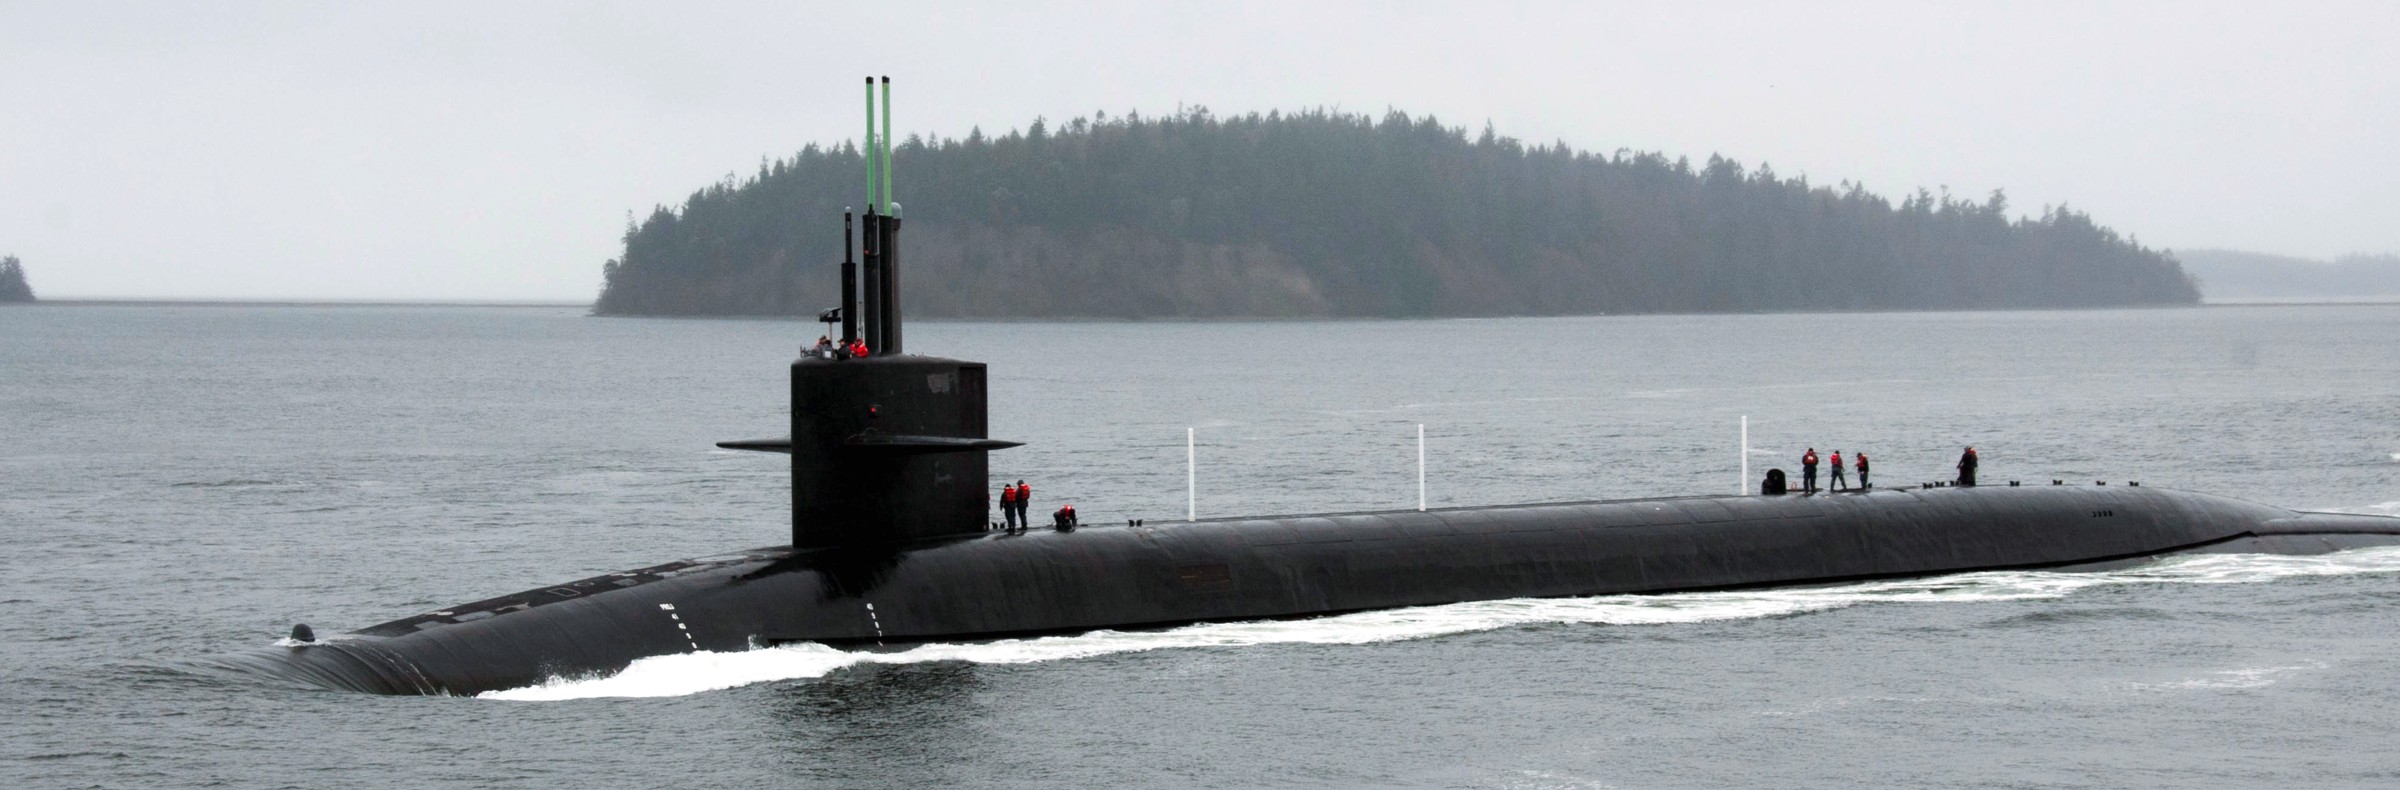 ssbn-730 uss henry m. jackson ohio class ballistic missile submarine 2016 09 puget sound